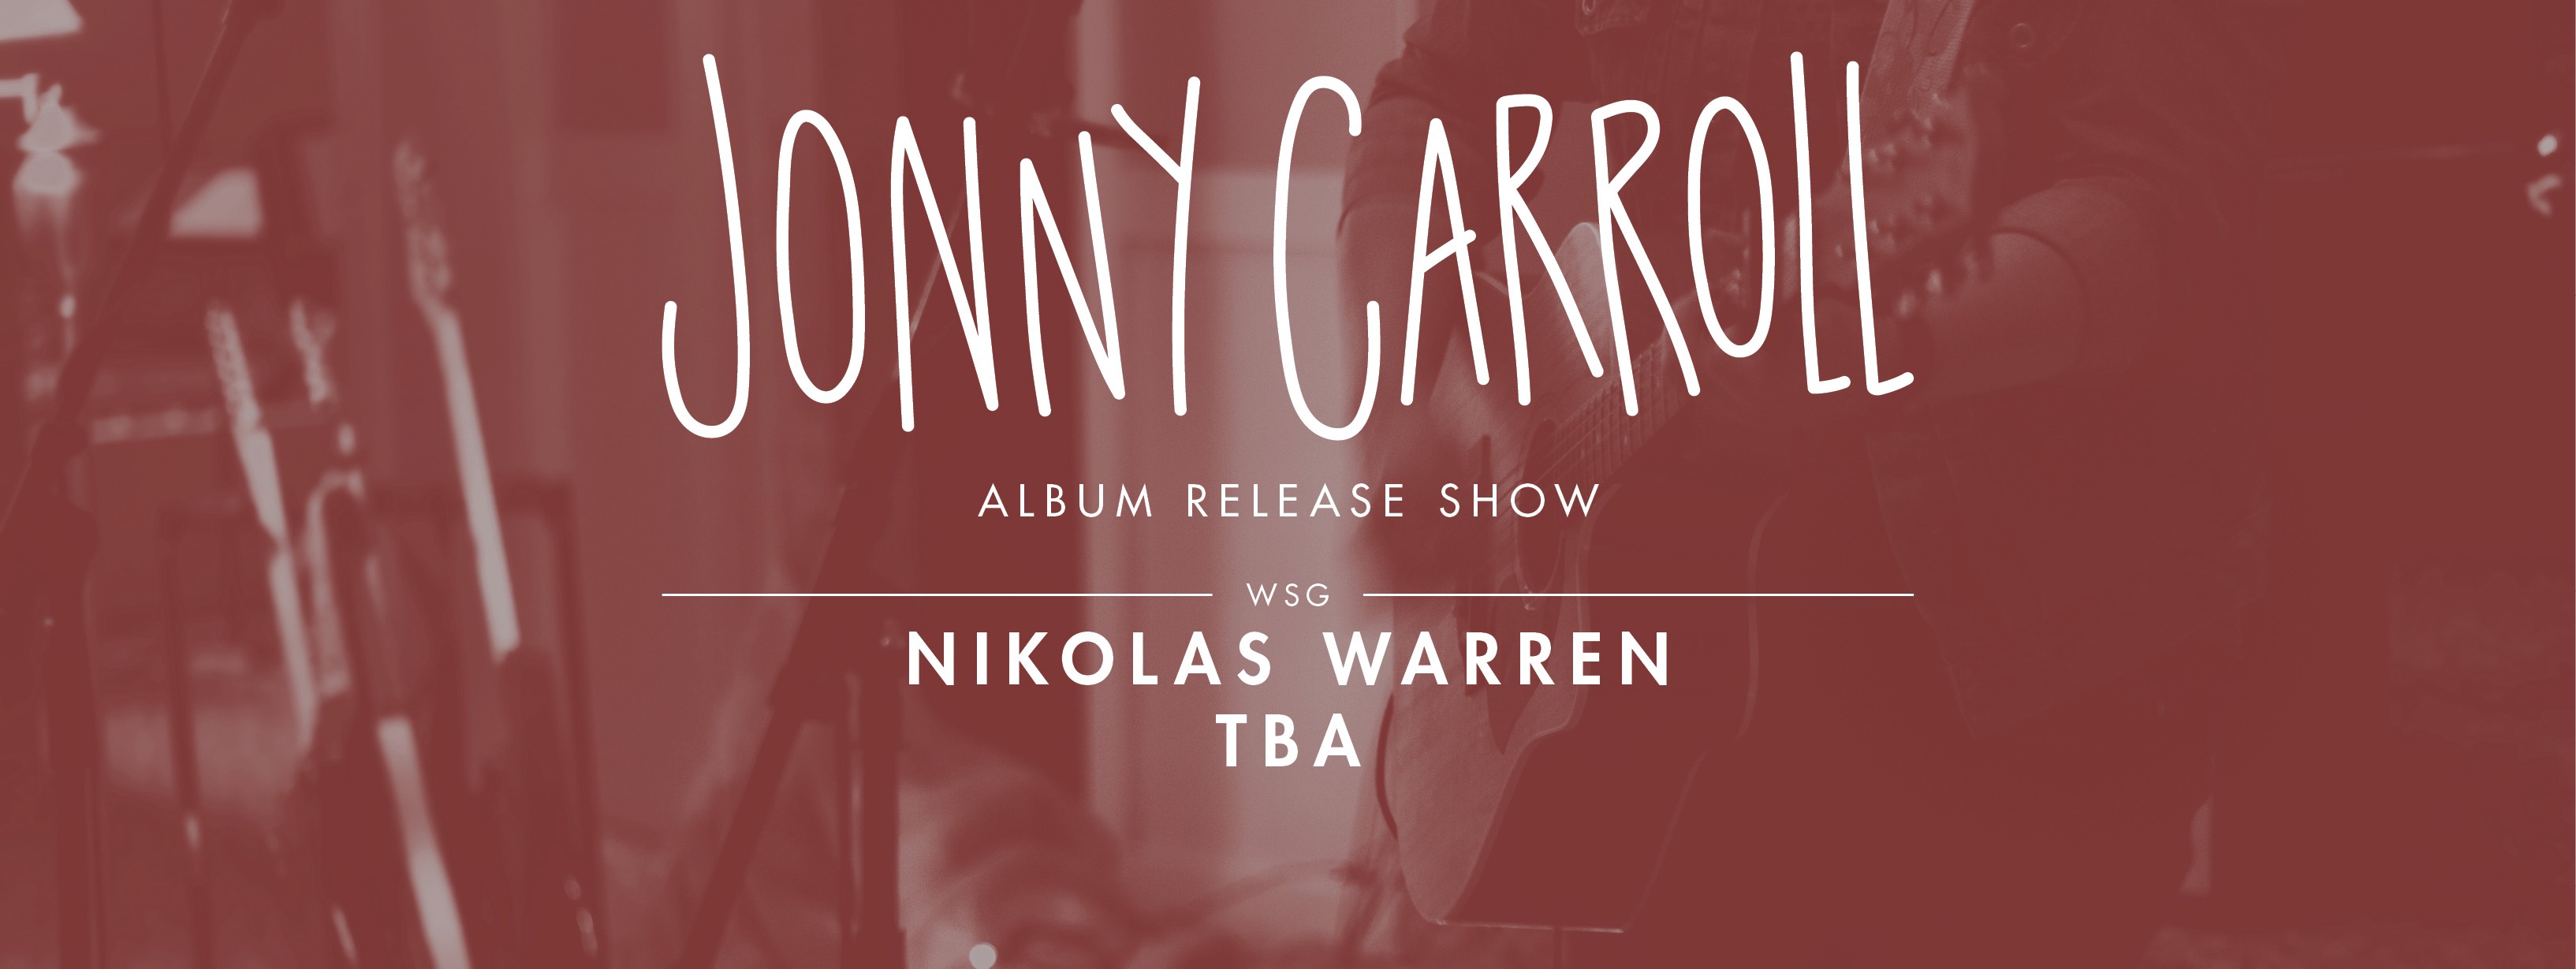 Jonny Carroll Album Release Show WSG Nikolas Warren, TBA